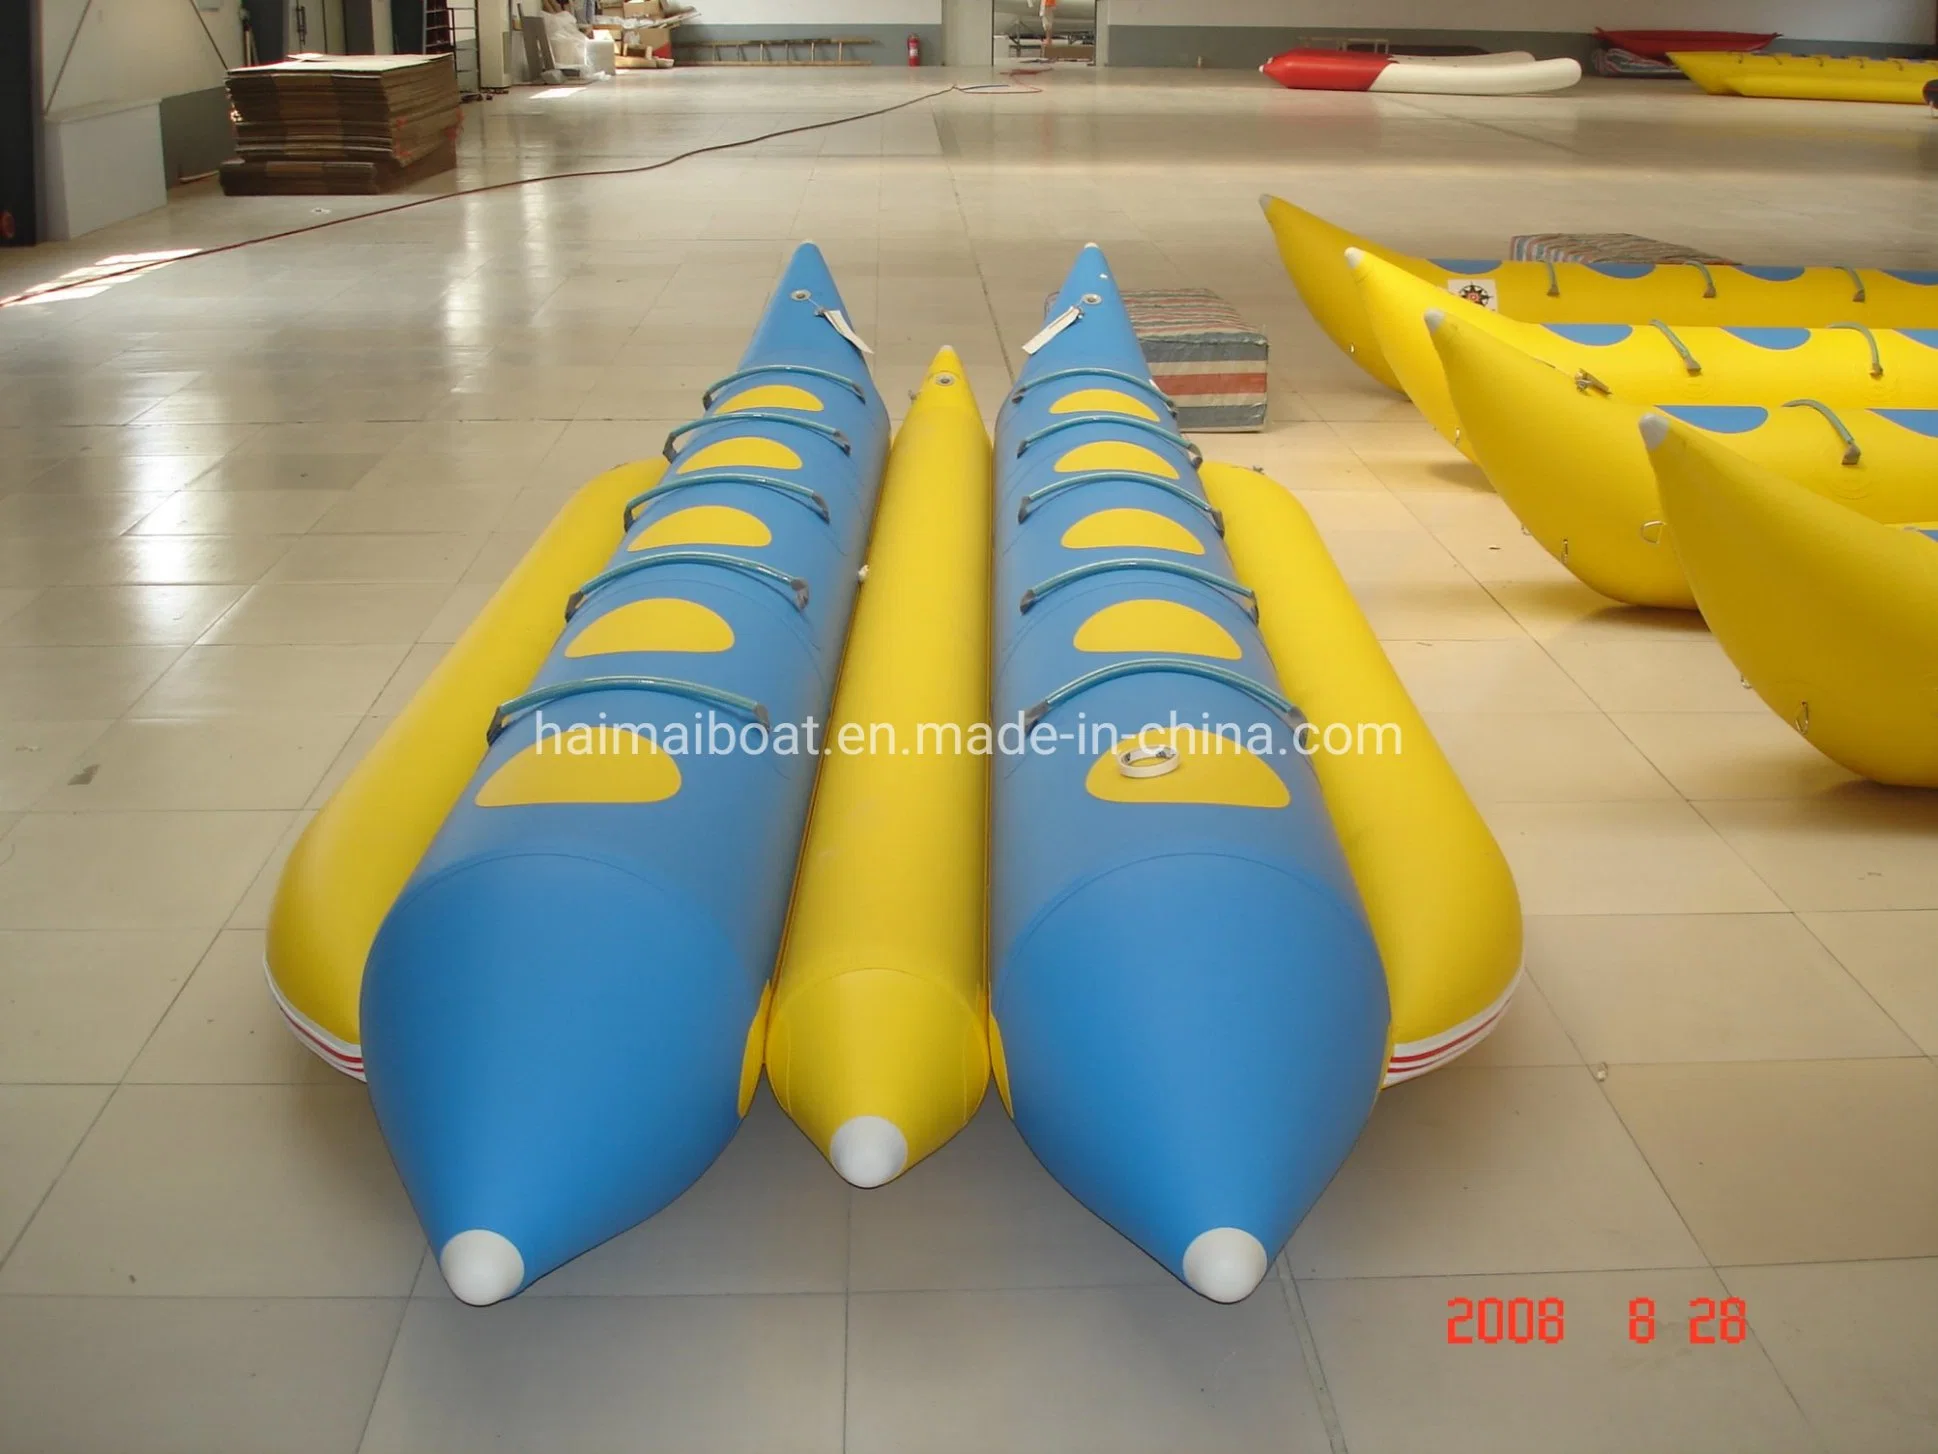 12.5ft inflables de PVC de 3,8 millones de Banana Boat barcos de recreo barcos embarcaciones Mar Draggy Motorless simple/doble fila de personas de varios Varios colores disponibles